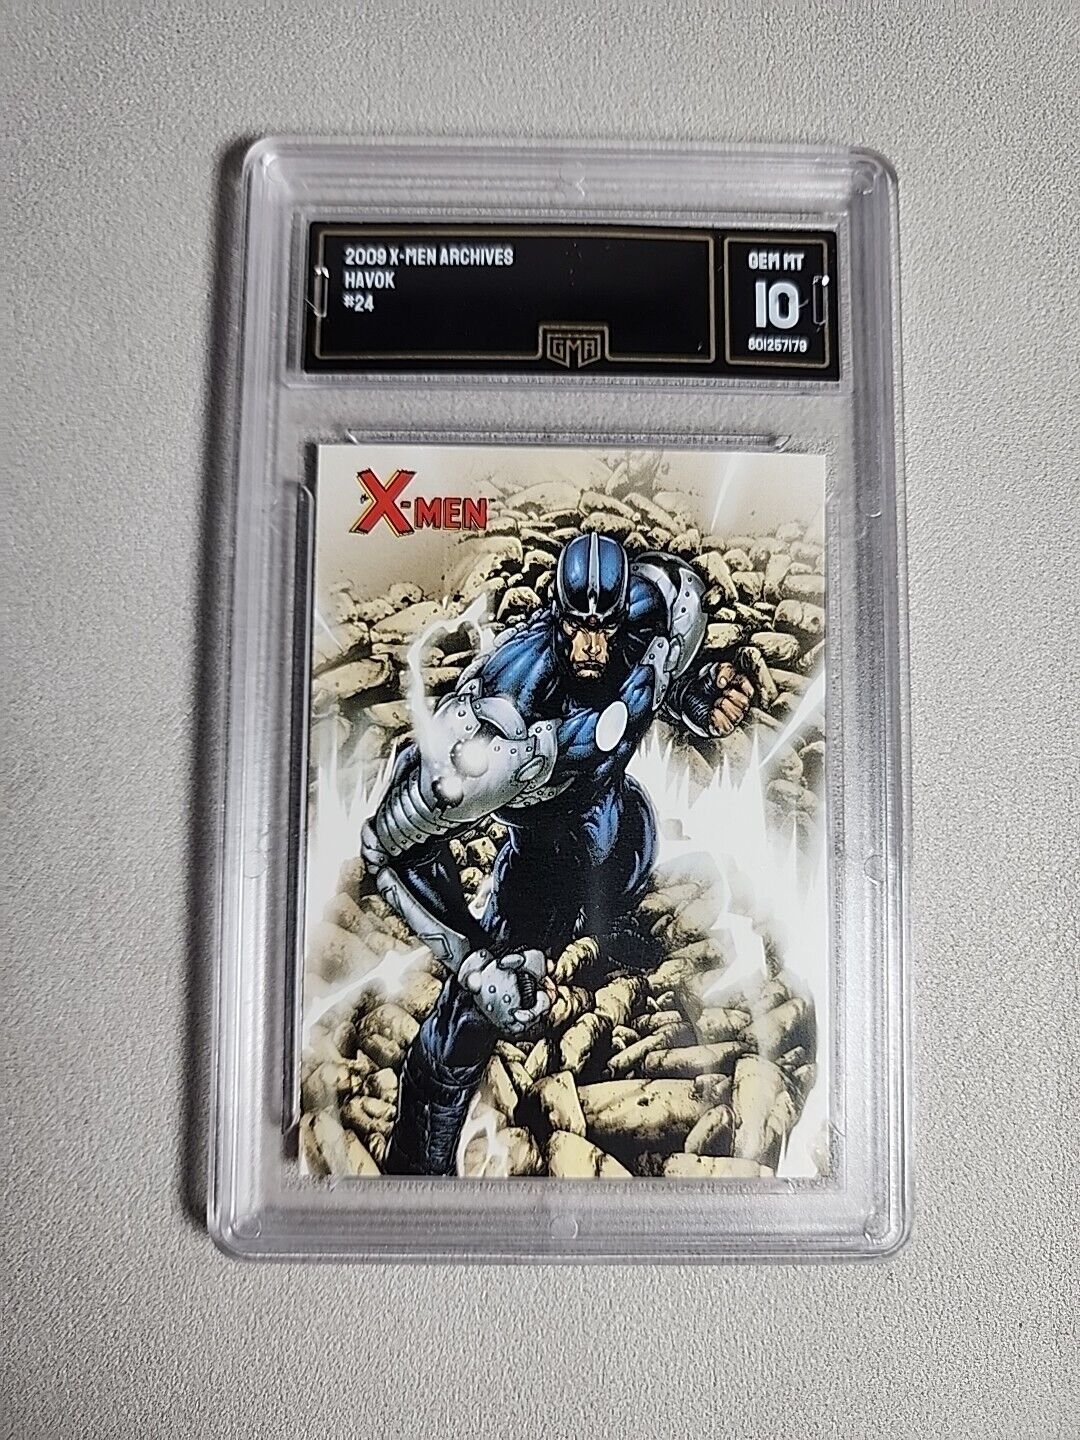 2009 X-Men Archives Trading Card #24 Havok GMA 10 Gem Mint Graded Card